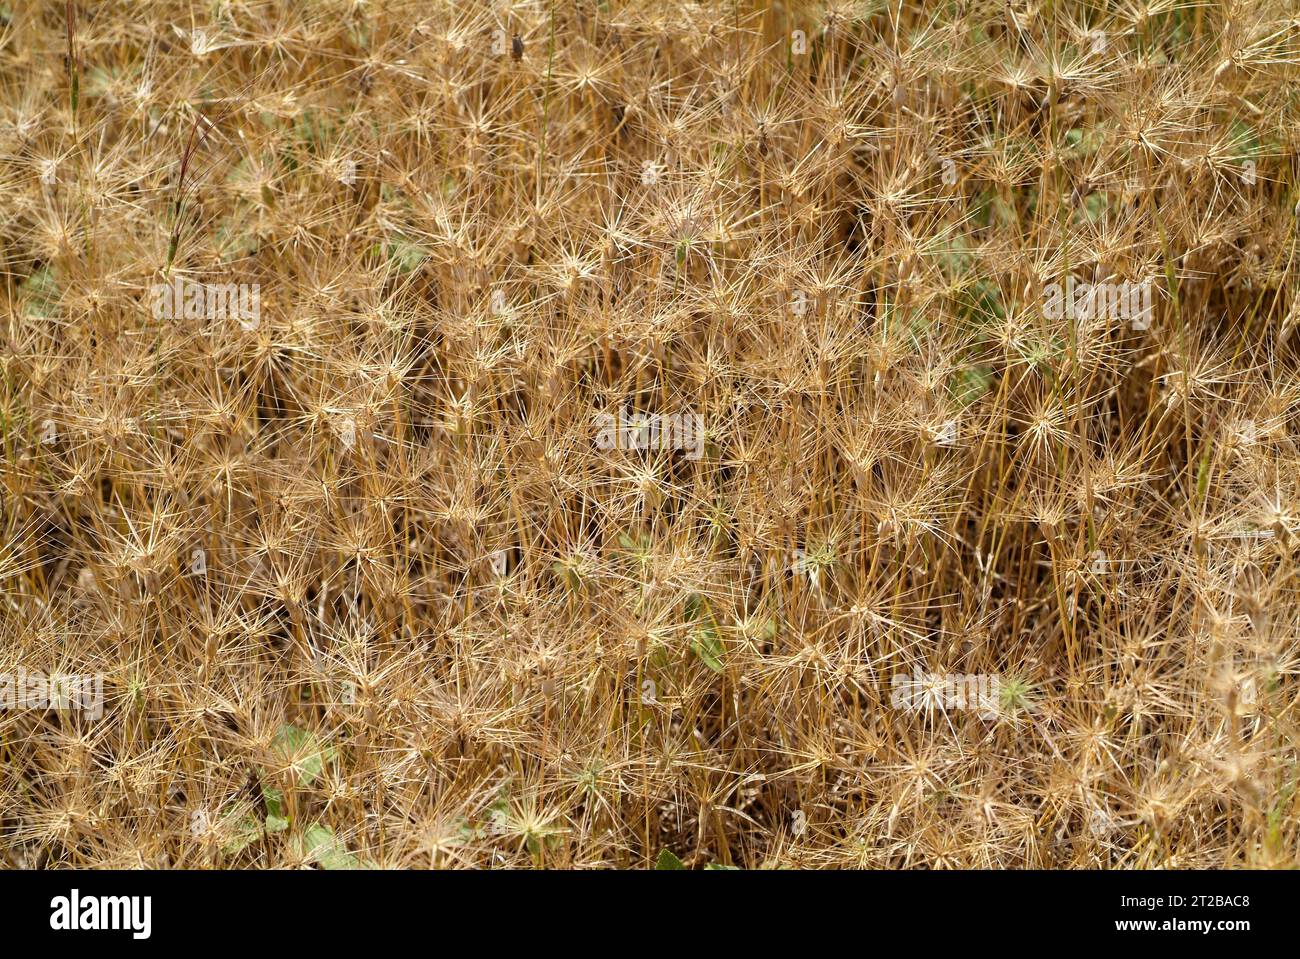 Ovate goatgrass (Aegilops geniculata) is an annual herb native to Mediterranean region. Stock Photo